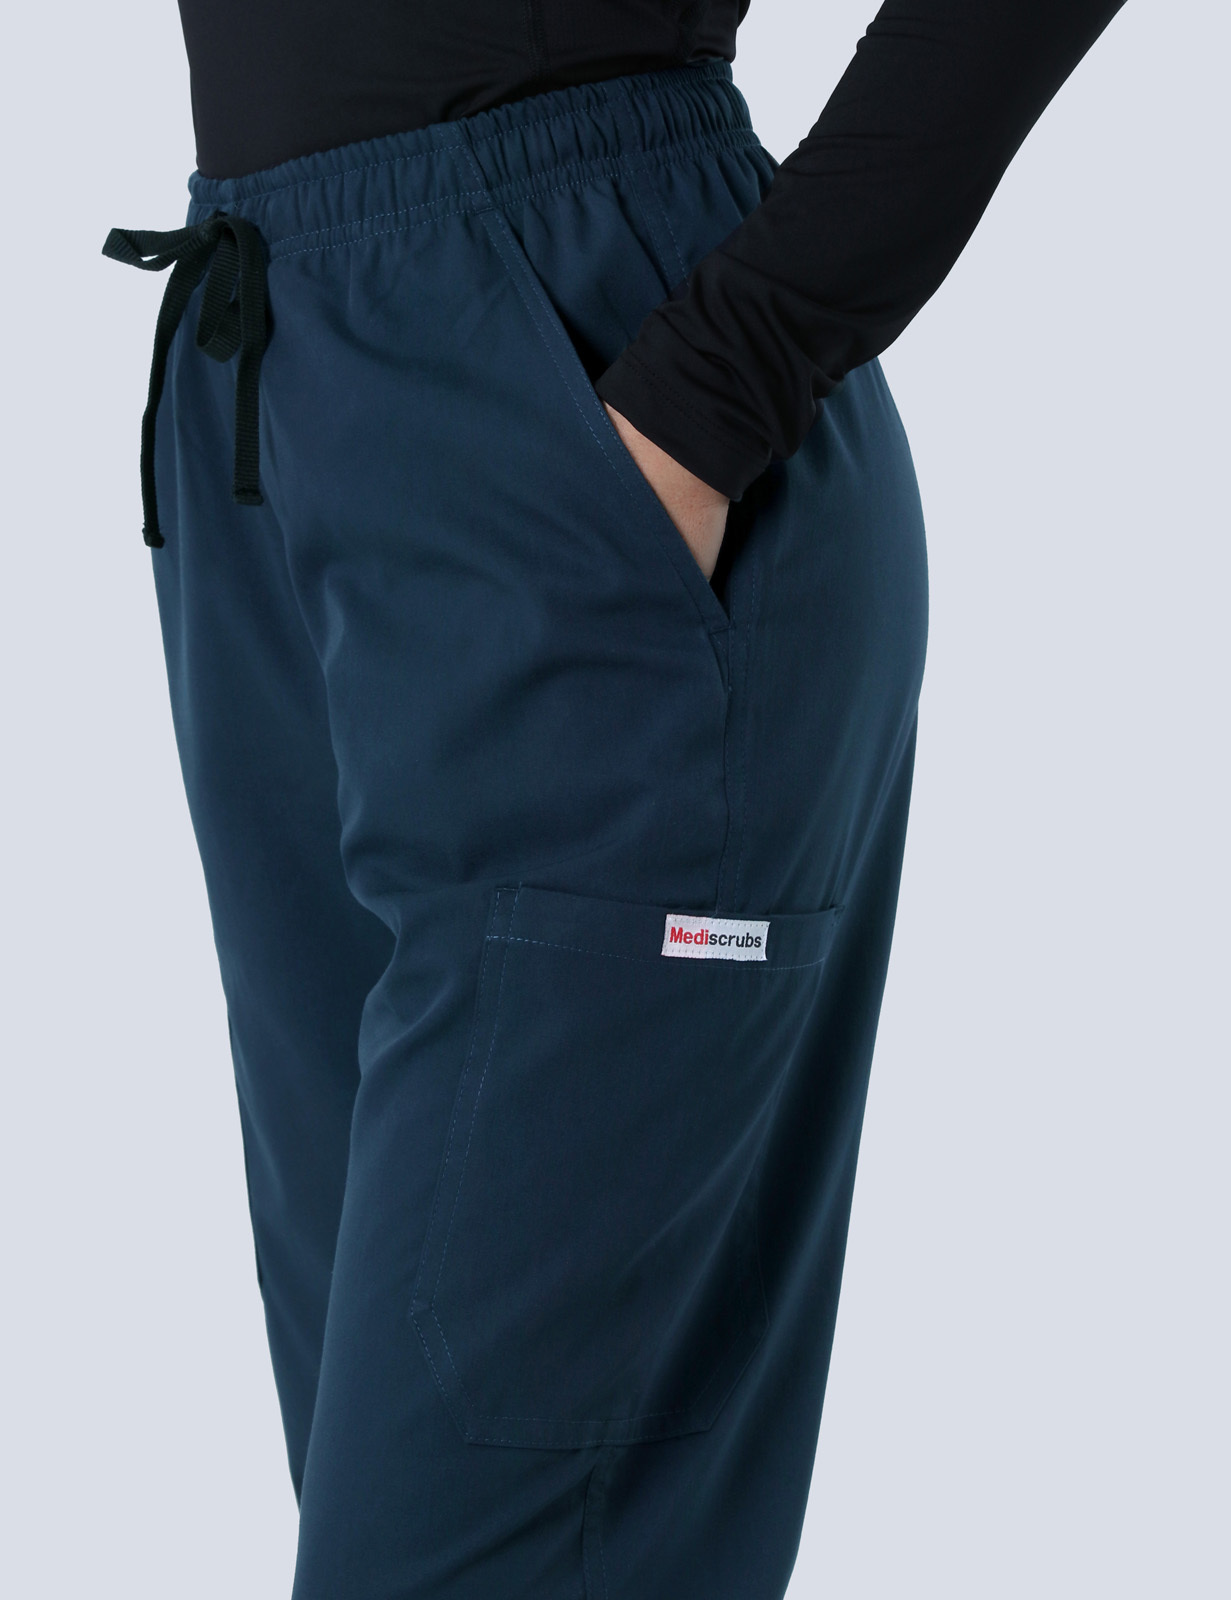 Women's Cargo Performance Pants - Navy - 2X Large - 1